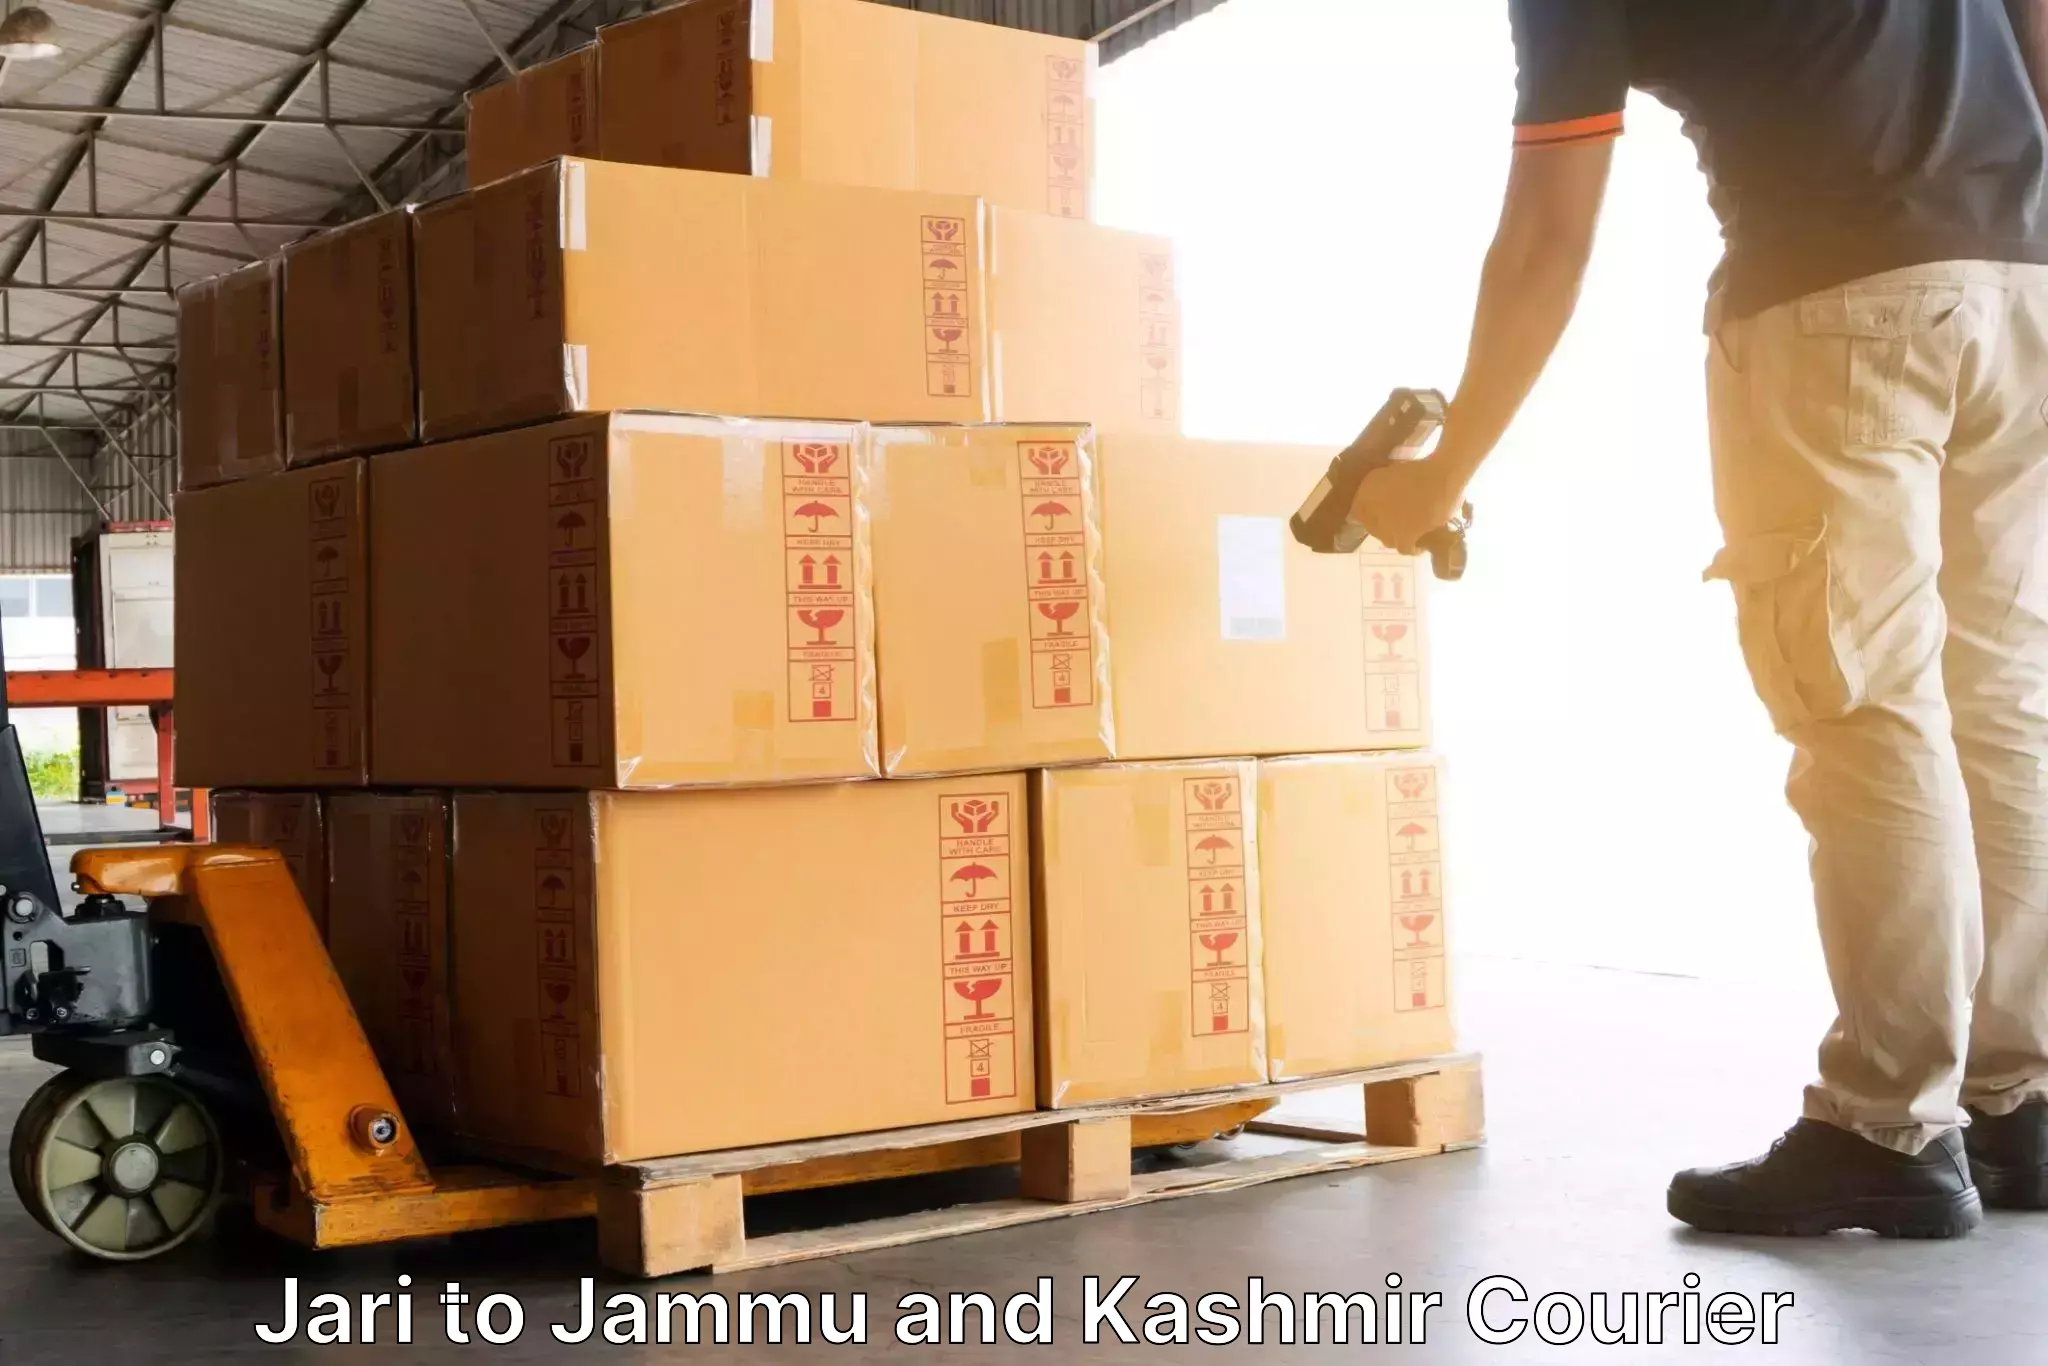 Courier service innovation Jari to University of Jammu